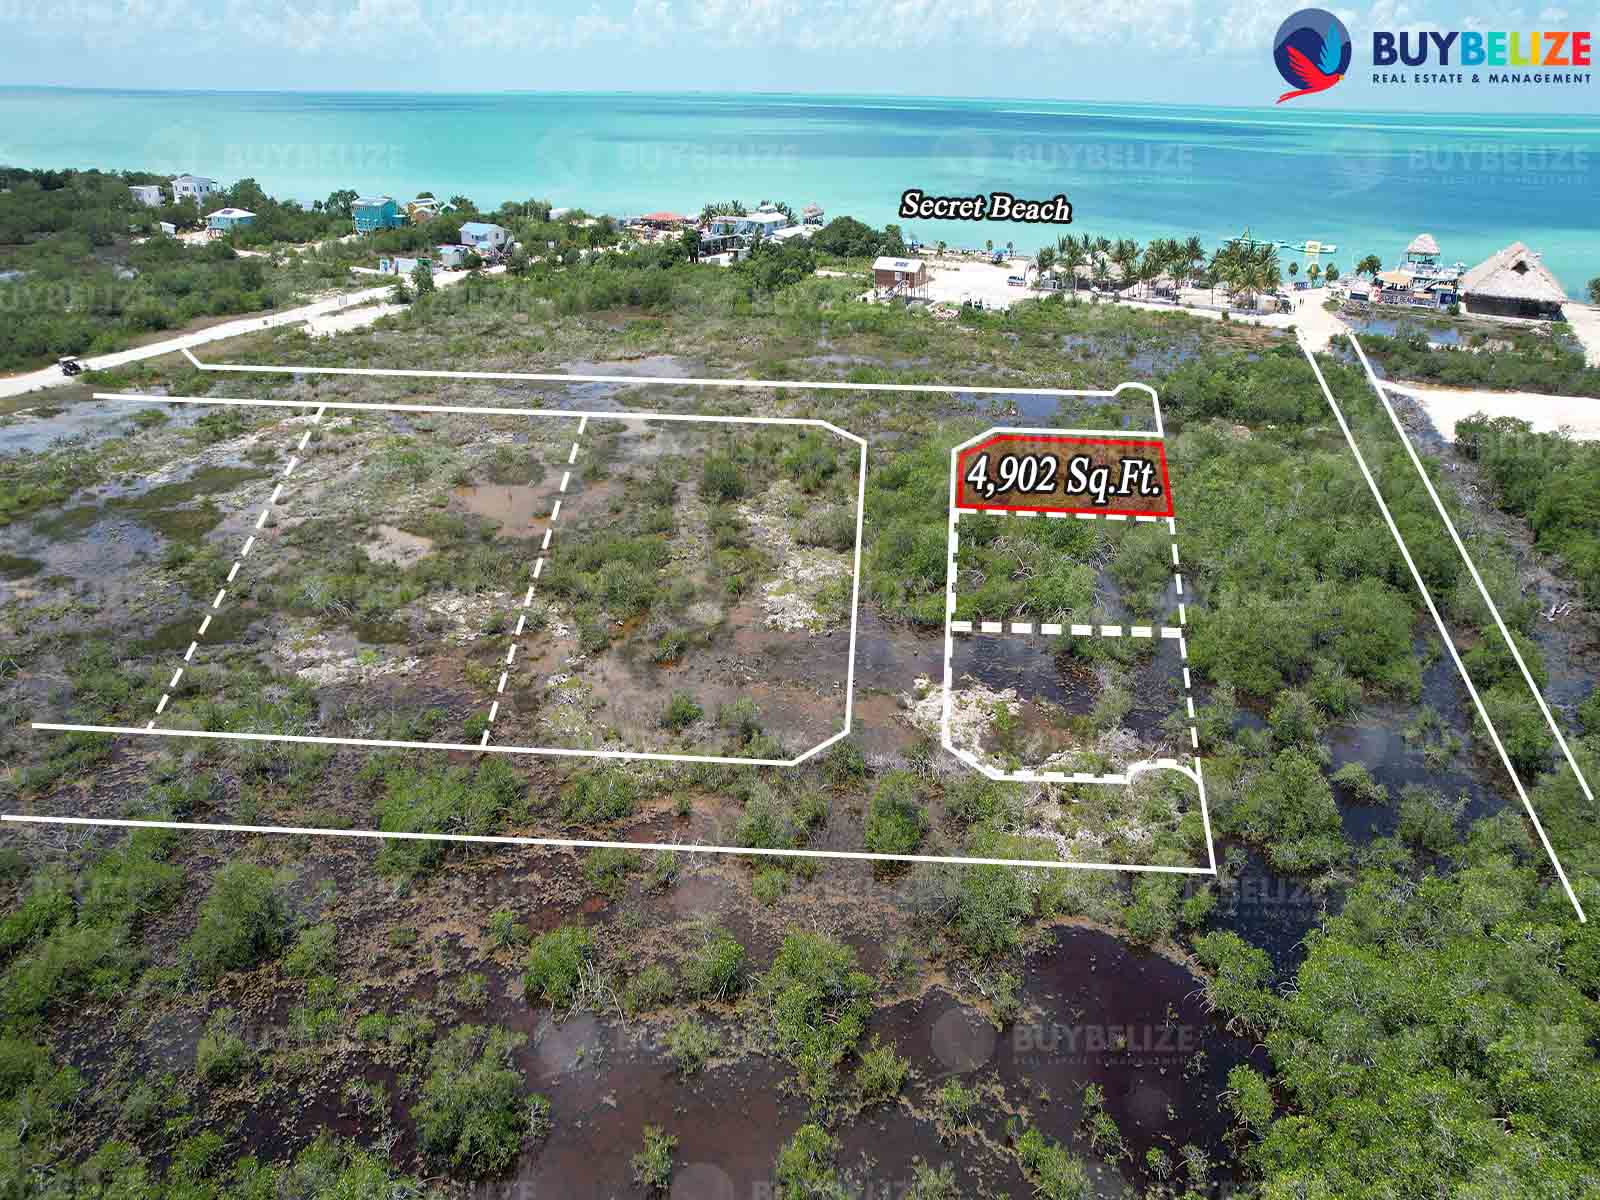 Grand Belizean Estate Corner lot for Sale, near Secret Beach, San Pedro Belize C.A